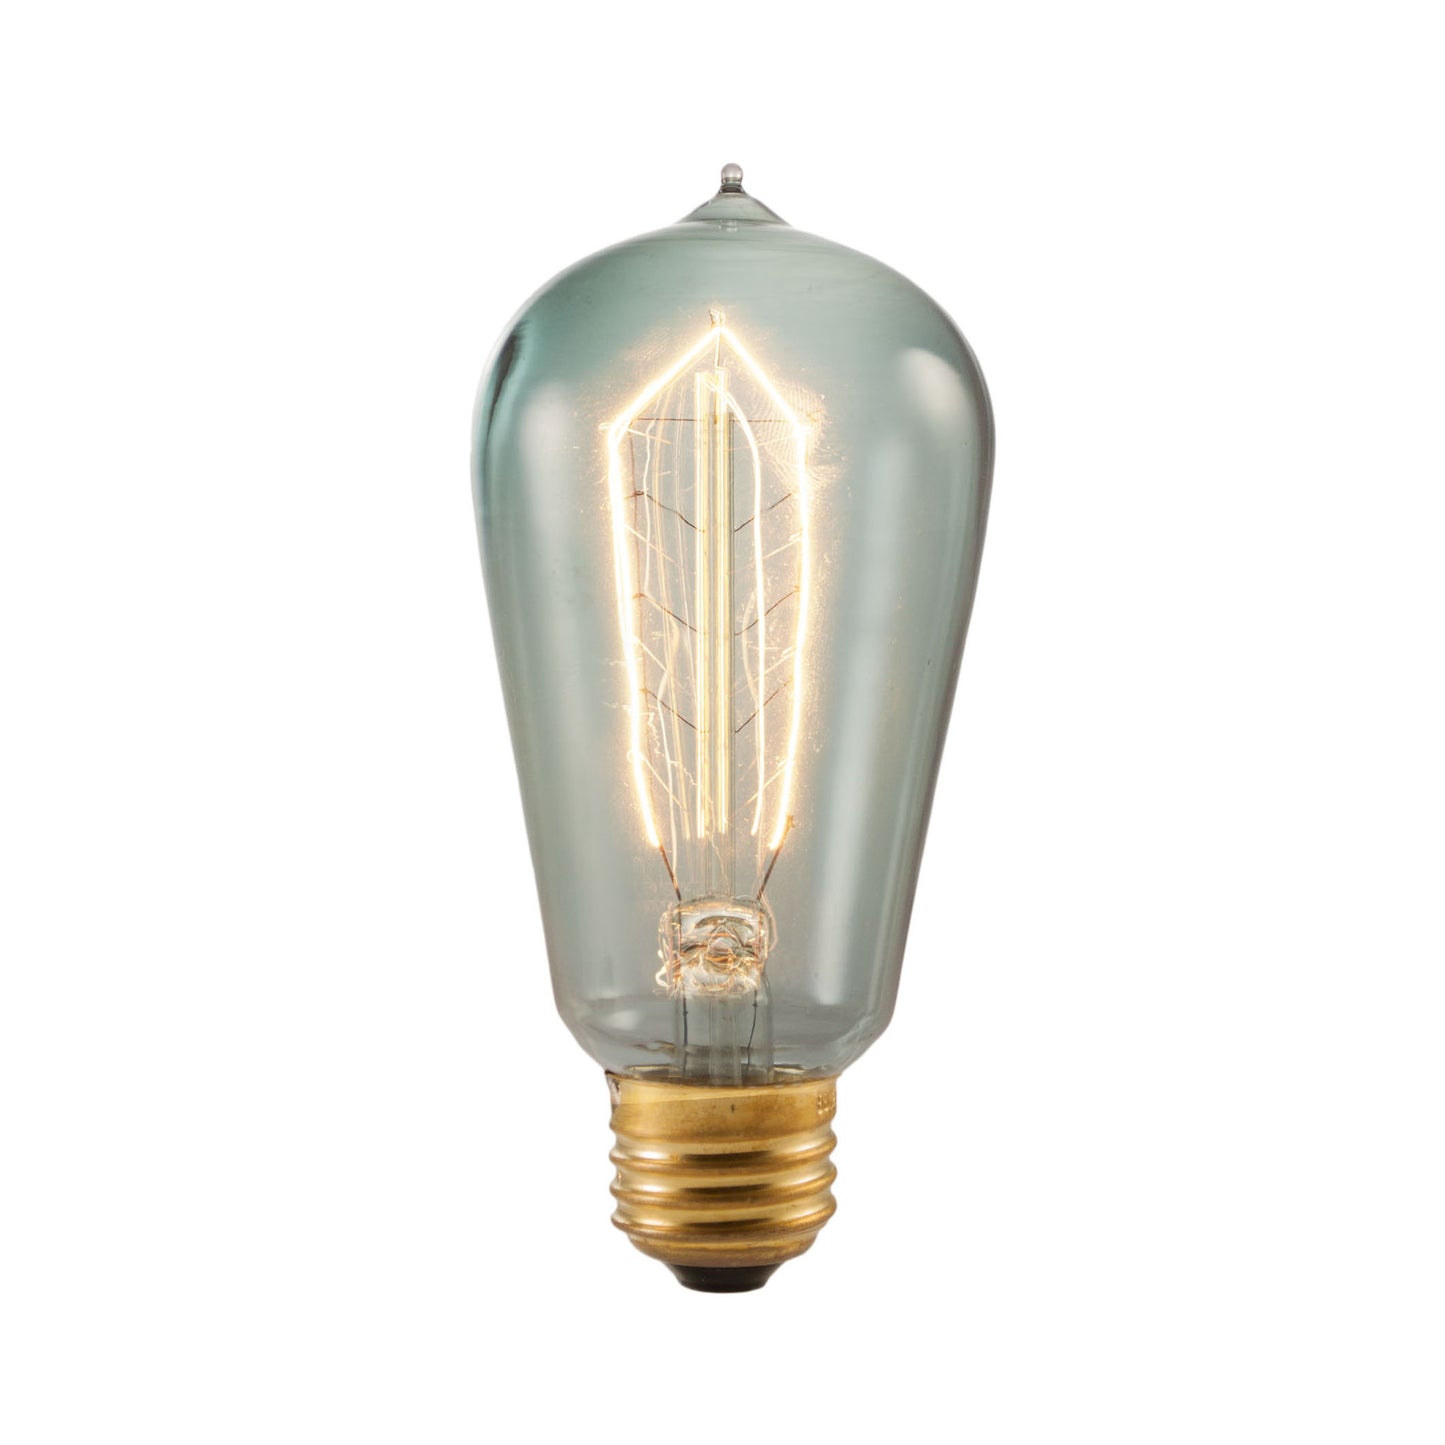 Bulbrite NOS40-1890/SMK 40 Watt Nostalgic Edison ST18 Bulb, Vintage Hairpin Filament, Medium Base, Smoke Finish